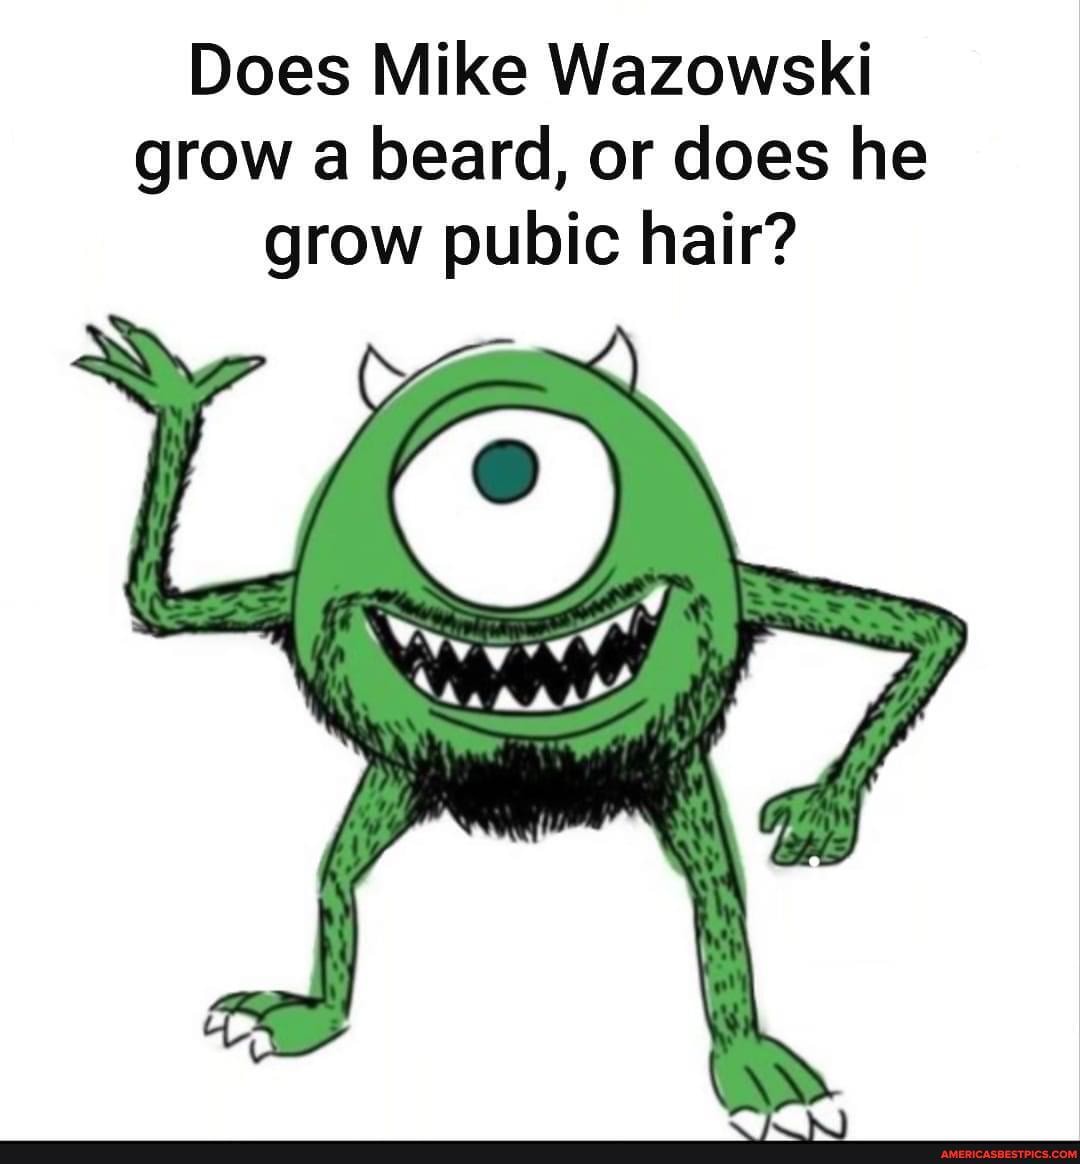 Does Mike Wazowski grow a beard, or does he grow pubic hair? 